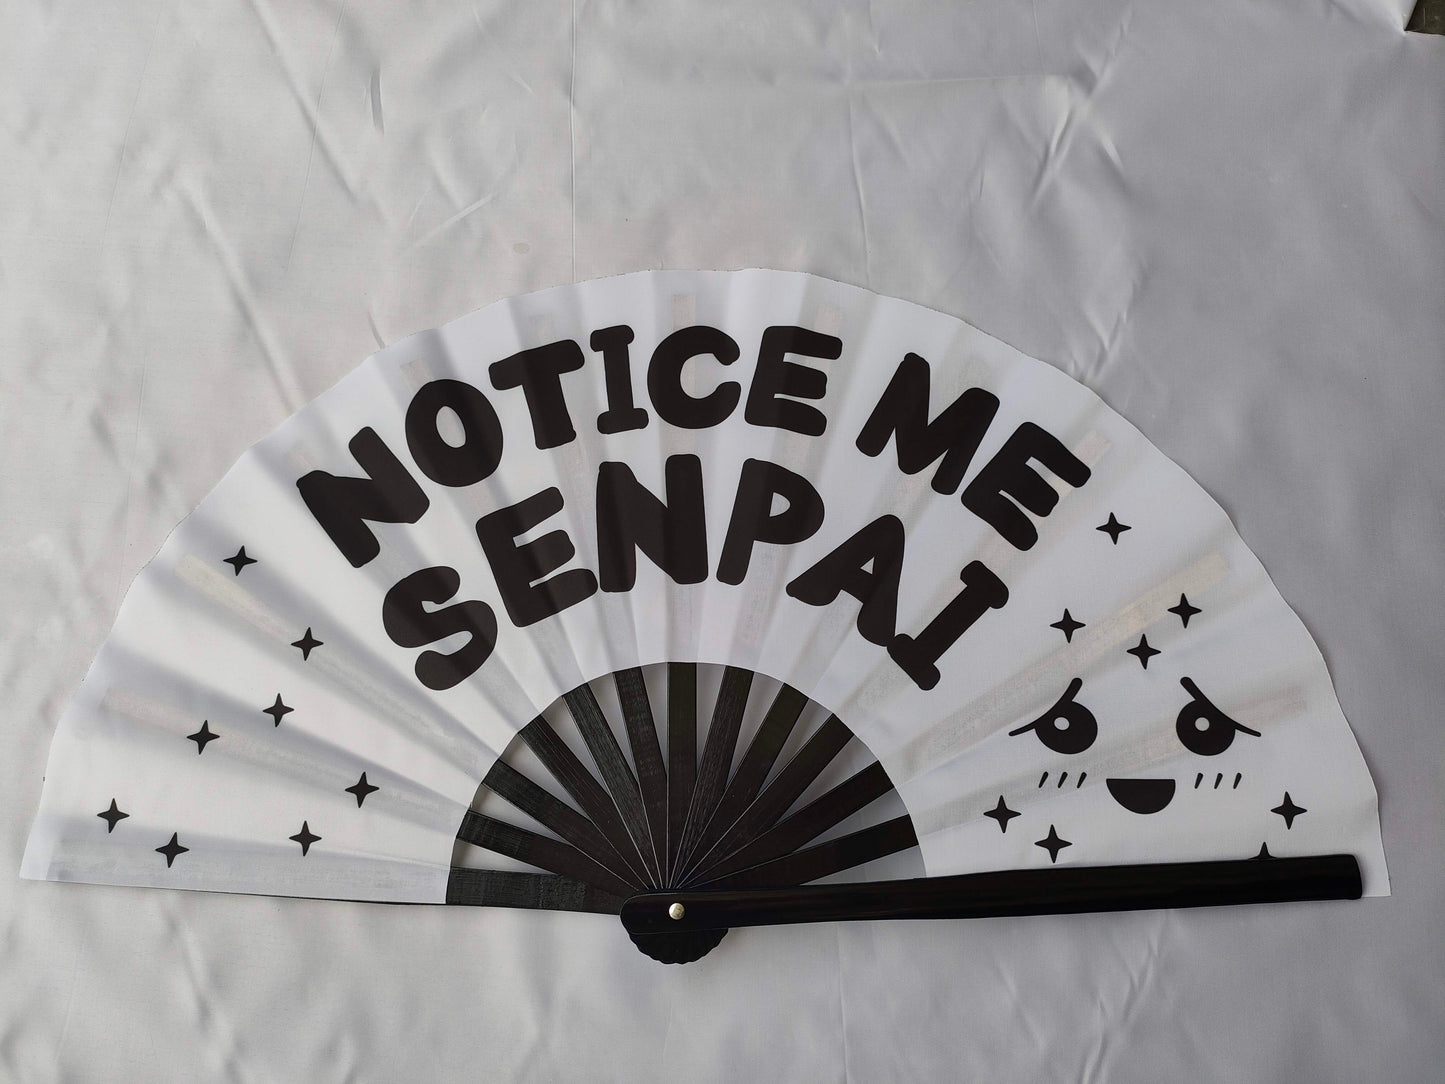 Notice Me Senpai - Folding Hand Fan